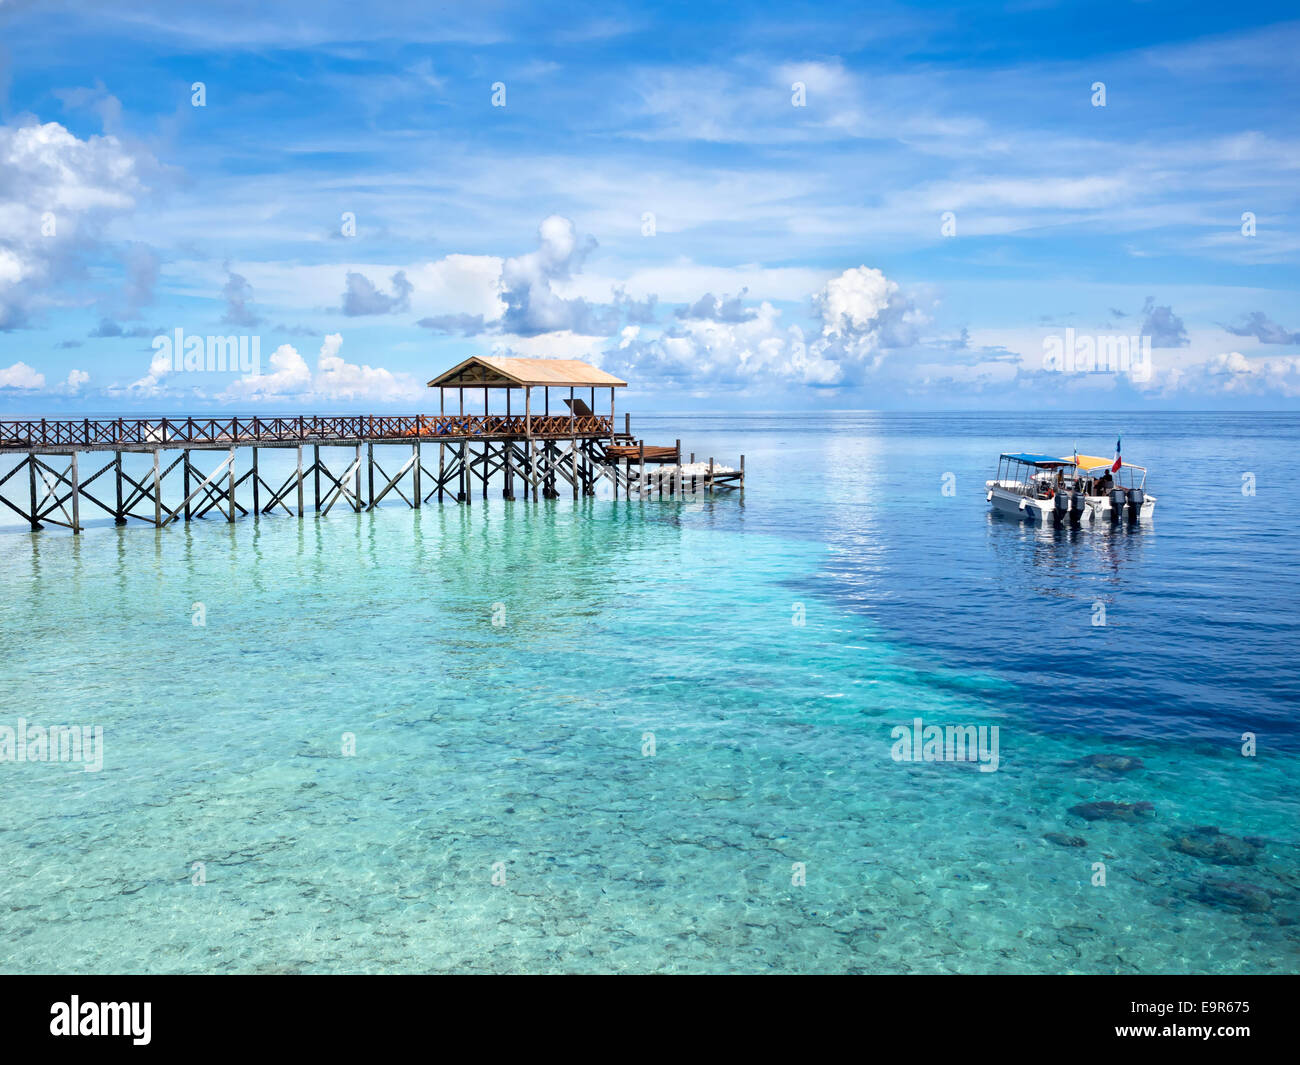 Boats at dive site off of the coast of world famous Pulau Sipadan island in Sabah, East Malaysia. Stock Photo